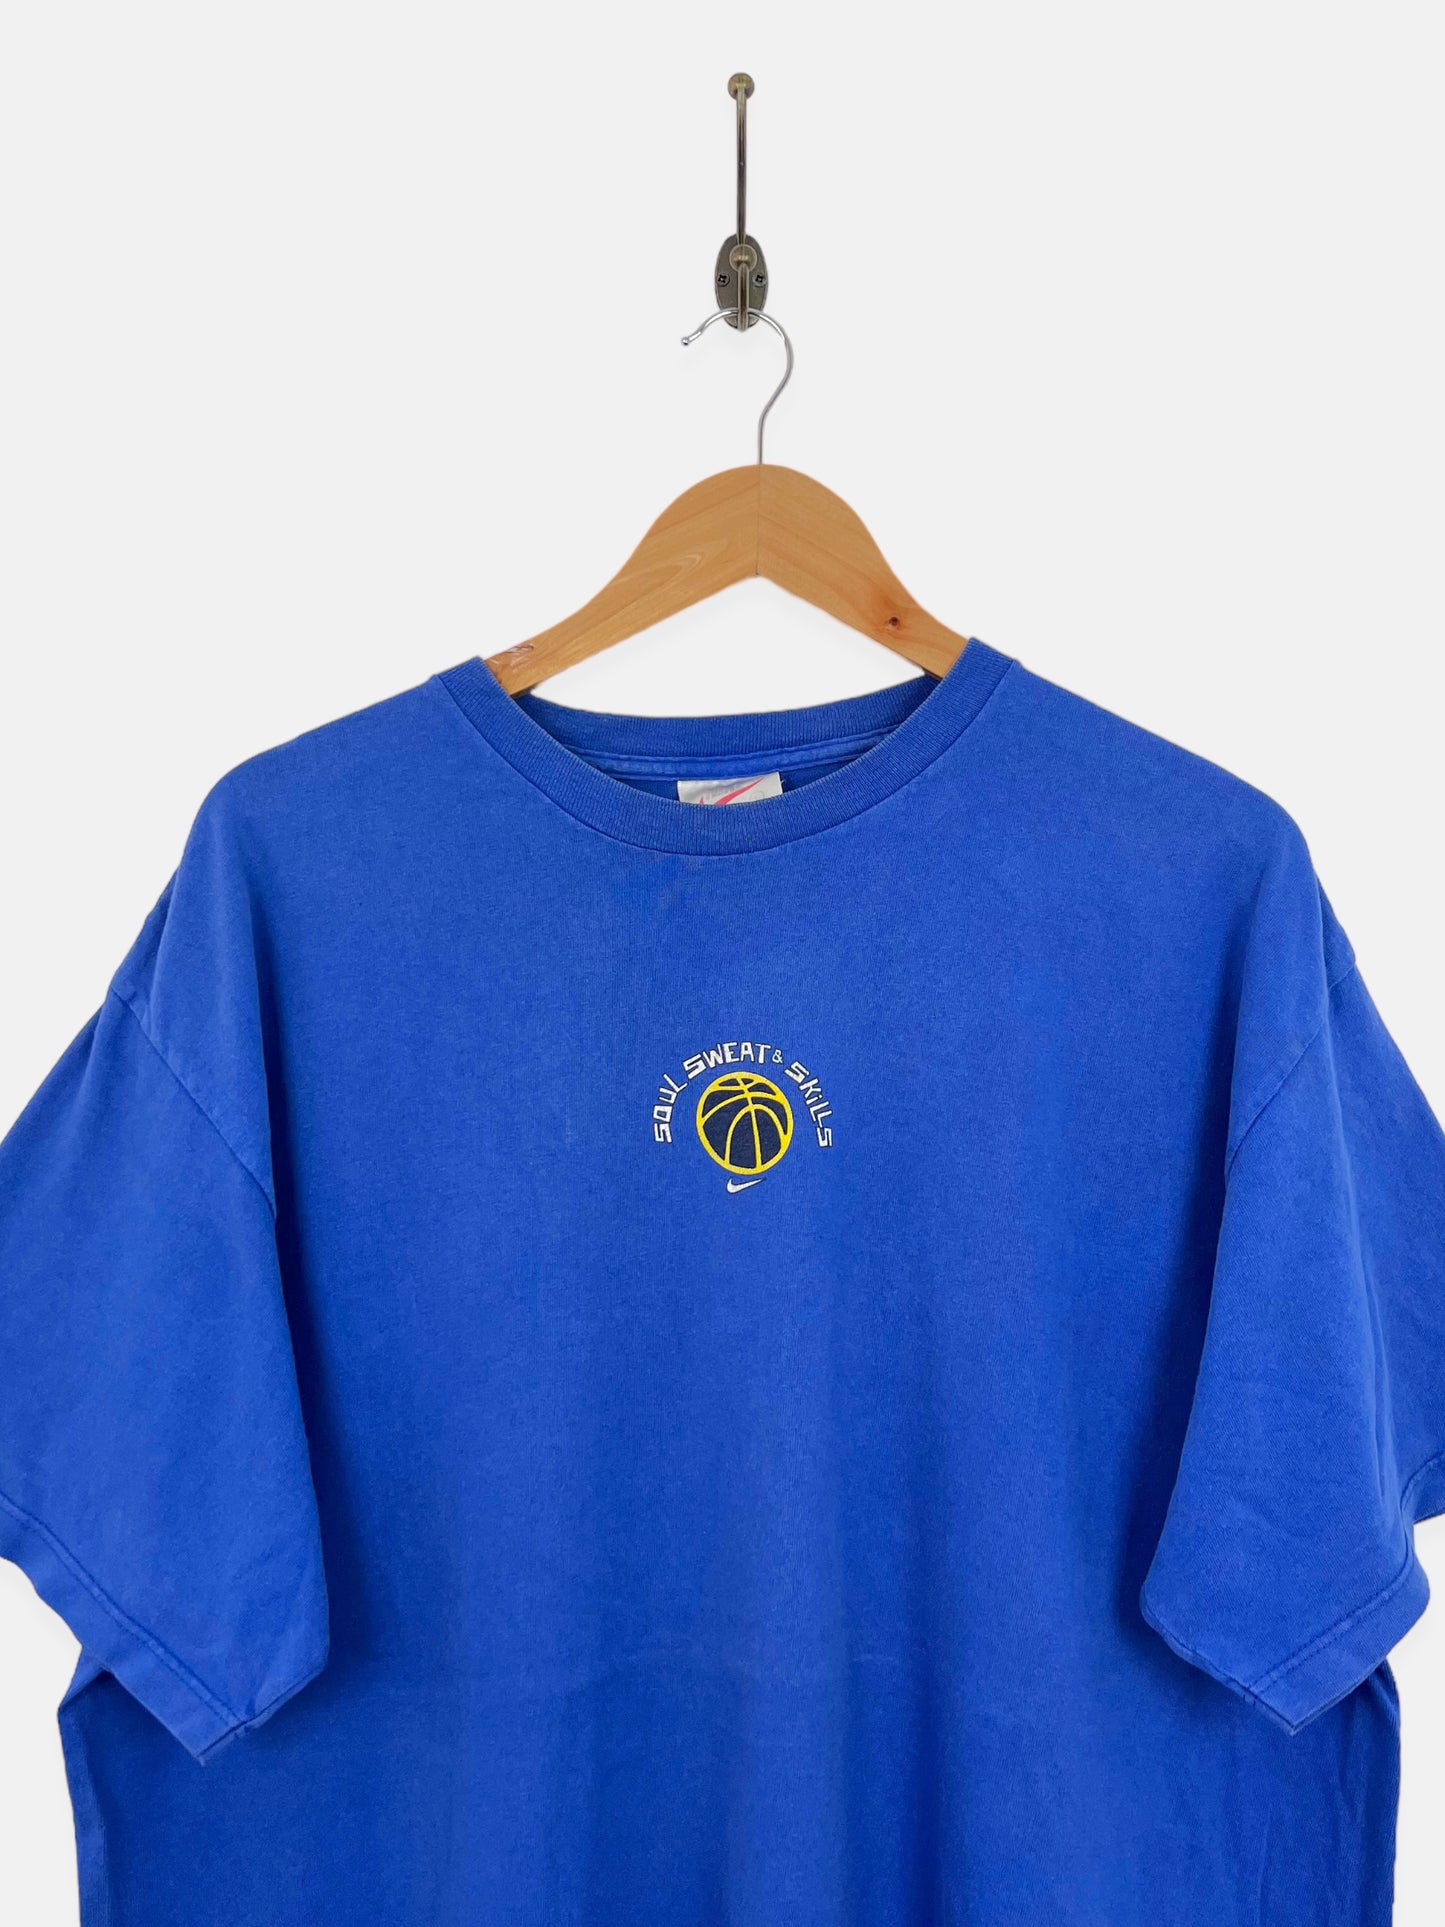 90's Nike Soul Sweat & Skills USA Made Vintage T-Shirt Size L-XL